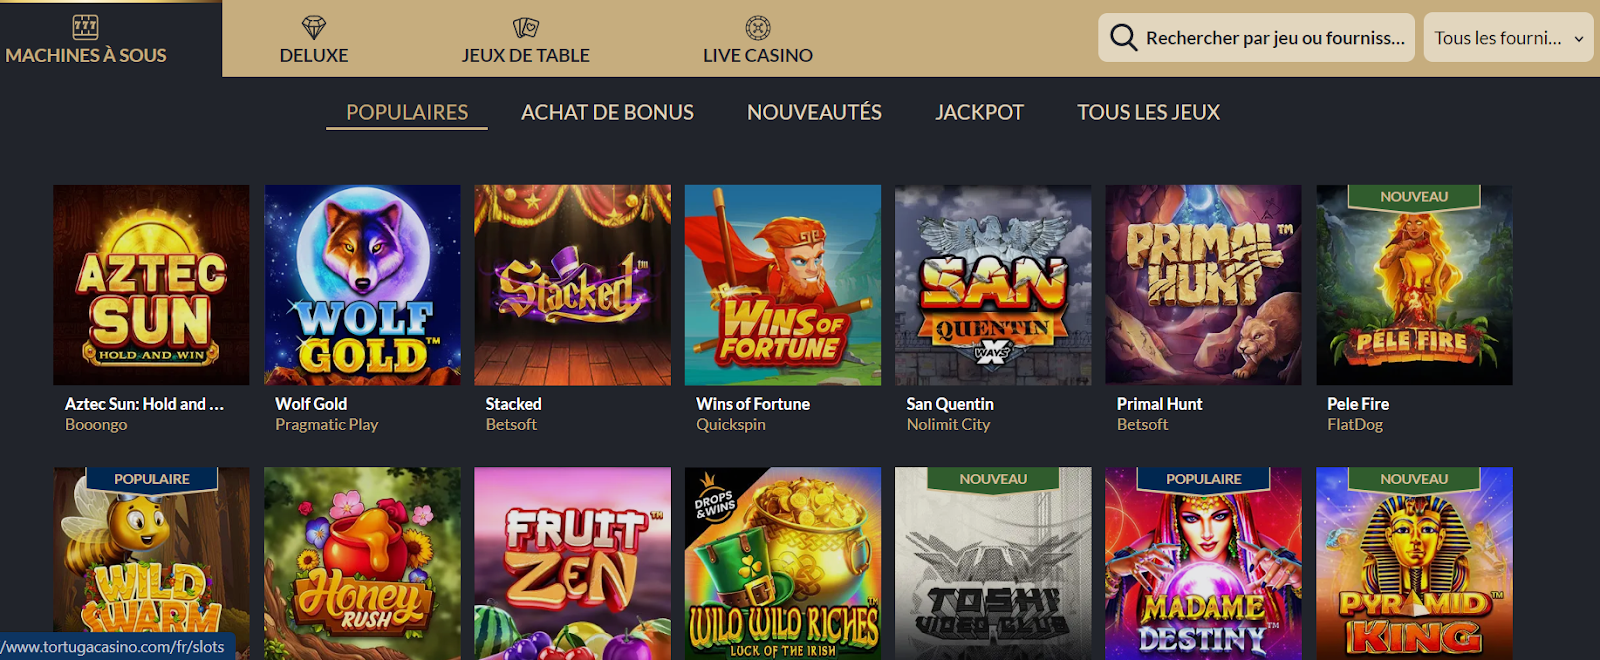 Catalogue de jeux Tortuga Casino